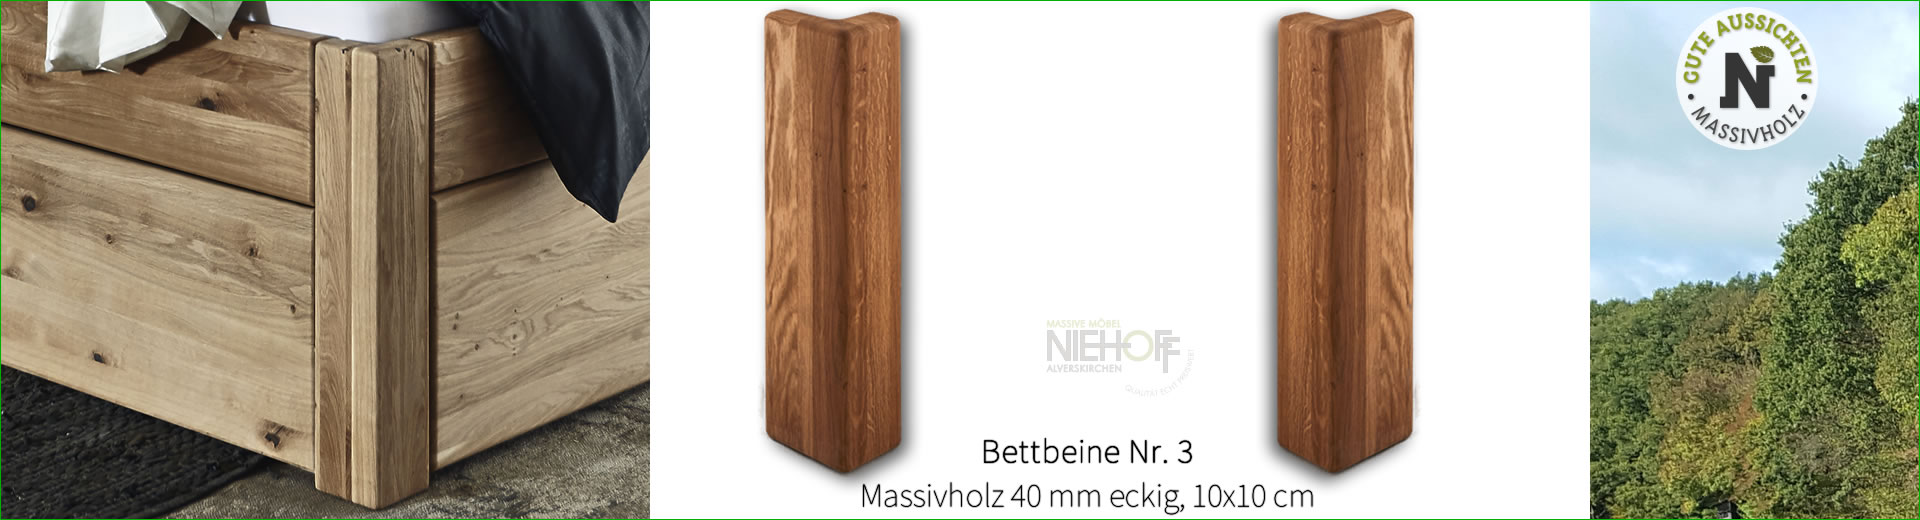 Bettbeine Nr. 3, Massivholz 40 mm eckig 10x10 cm, Höhe 54 cm